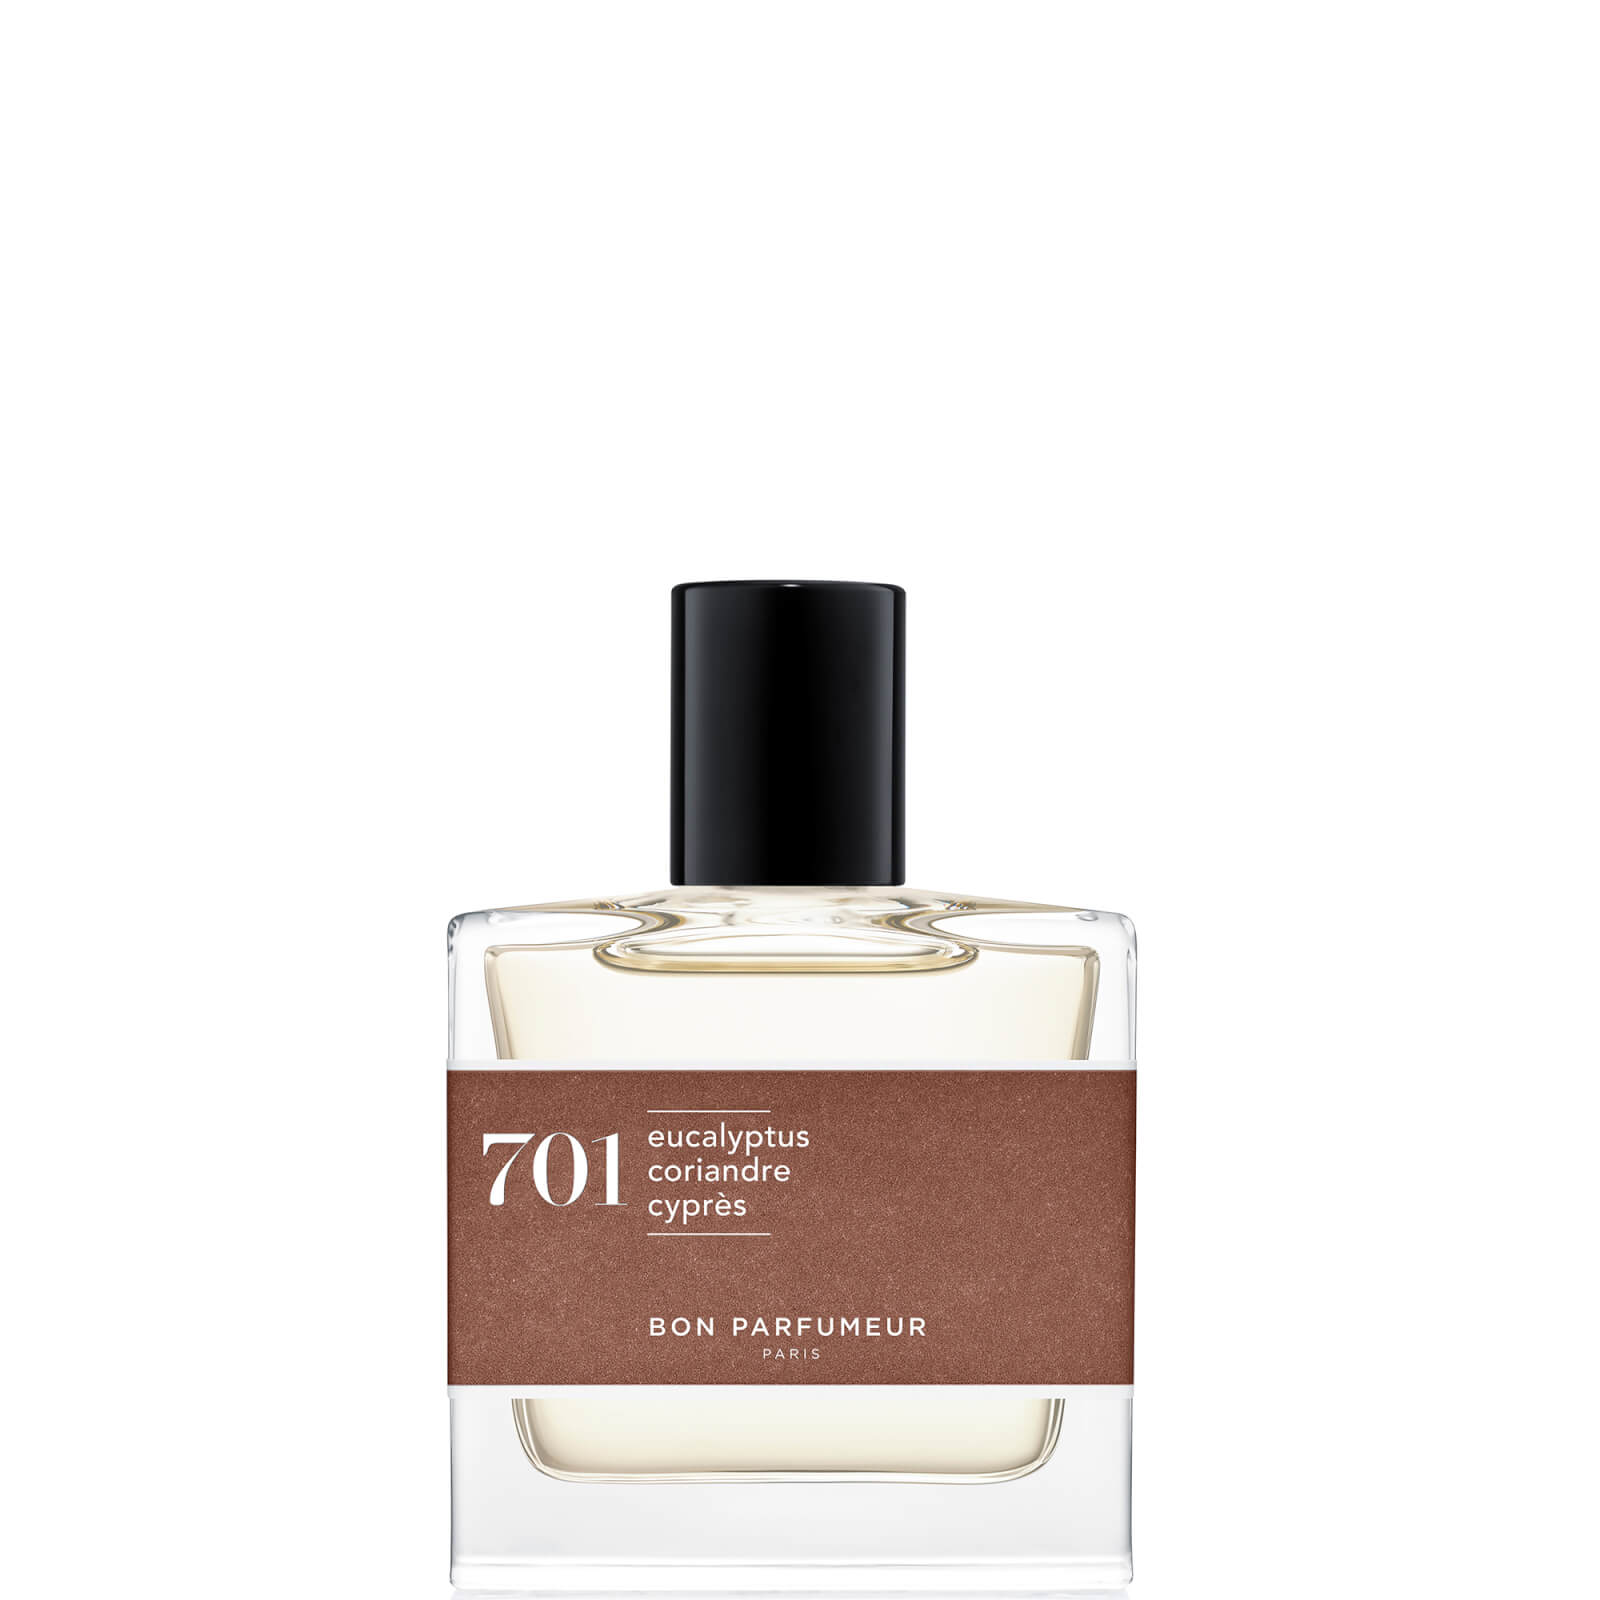 Image of Bon Parfumeur 701 Eucalipto Coriandolo Cypresso Eau de Parfum - 30ml